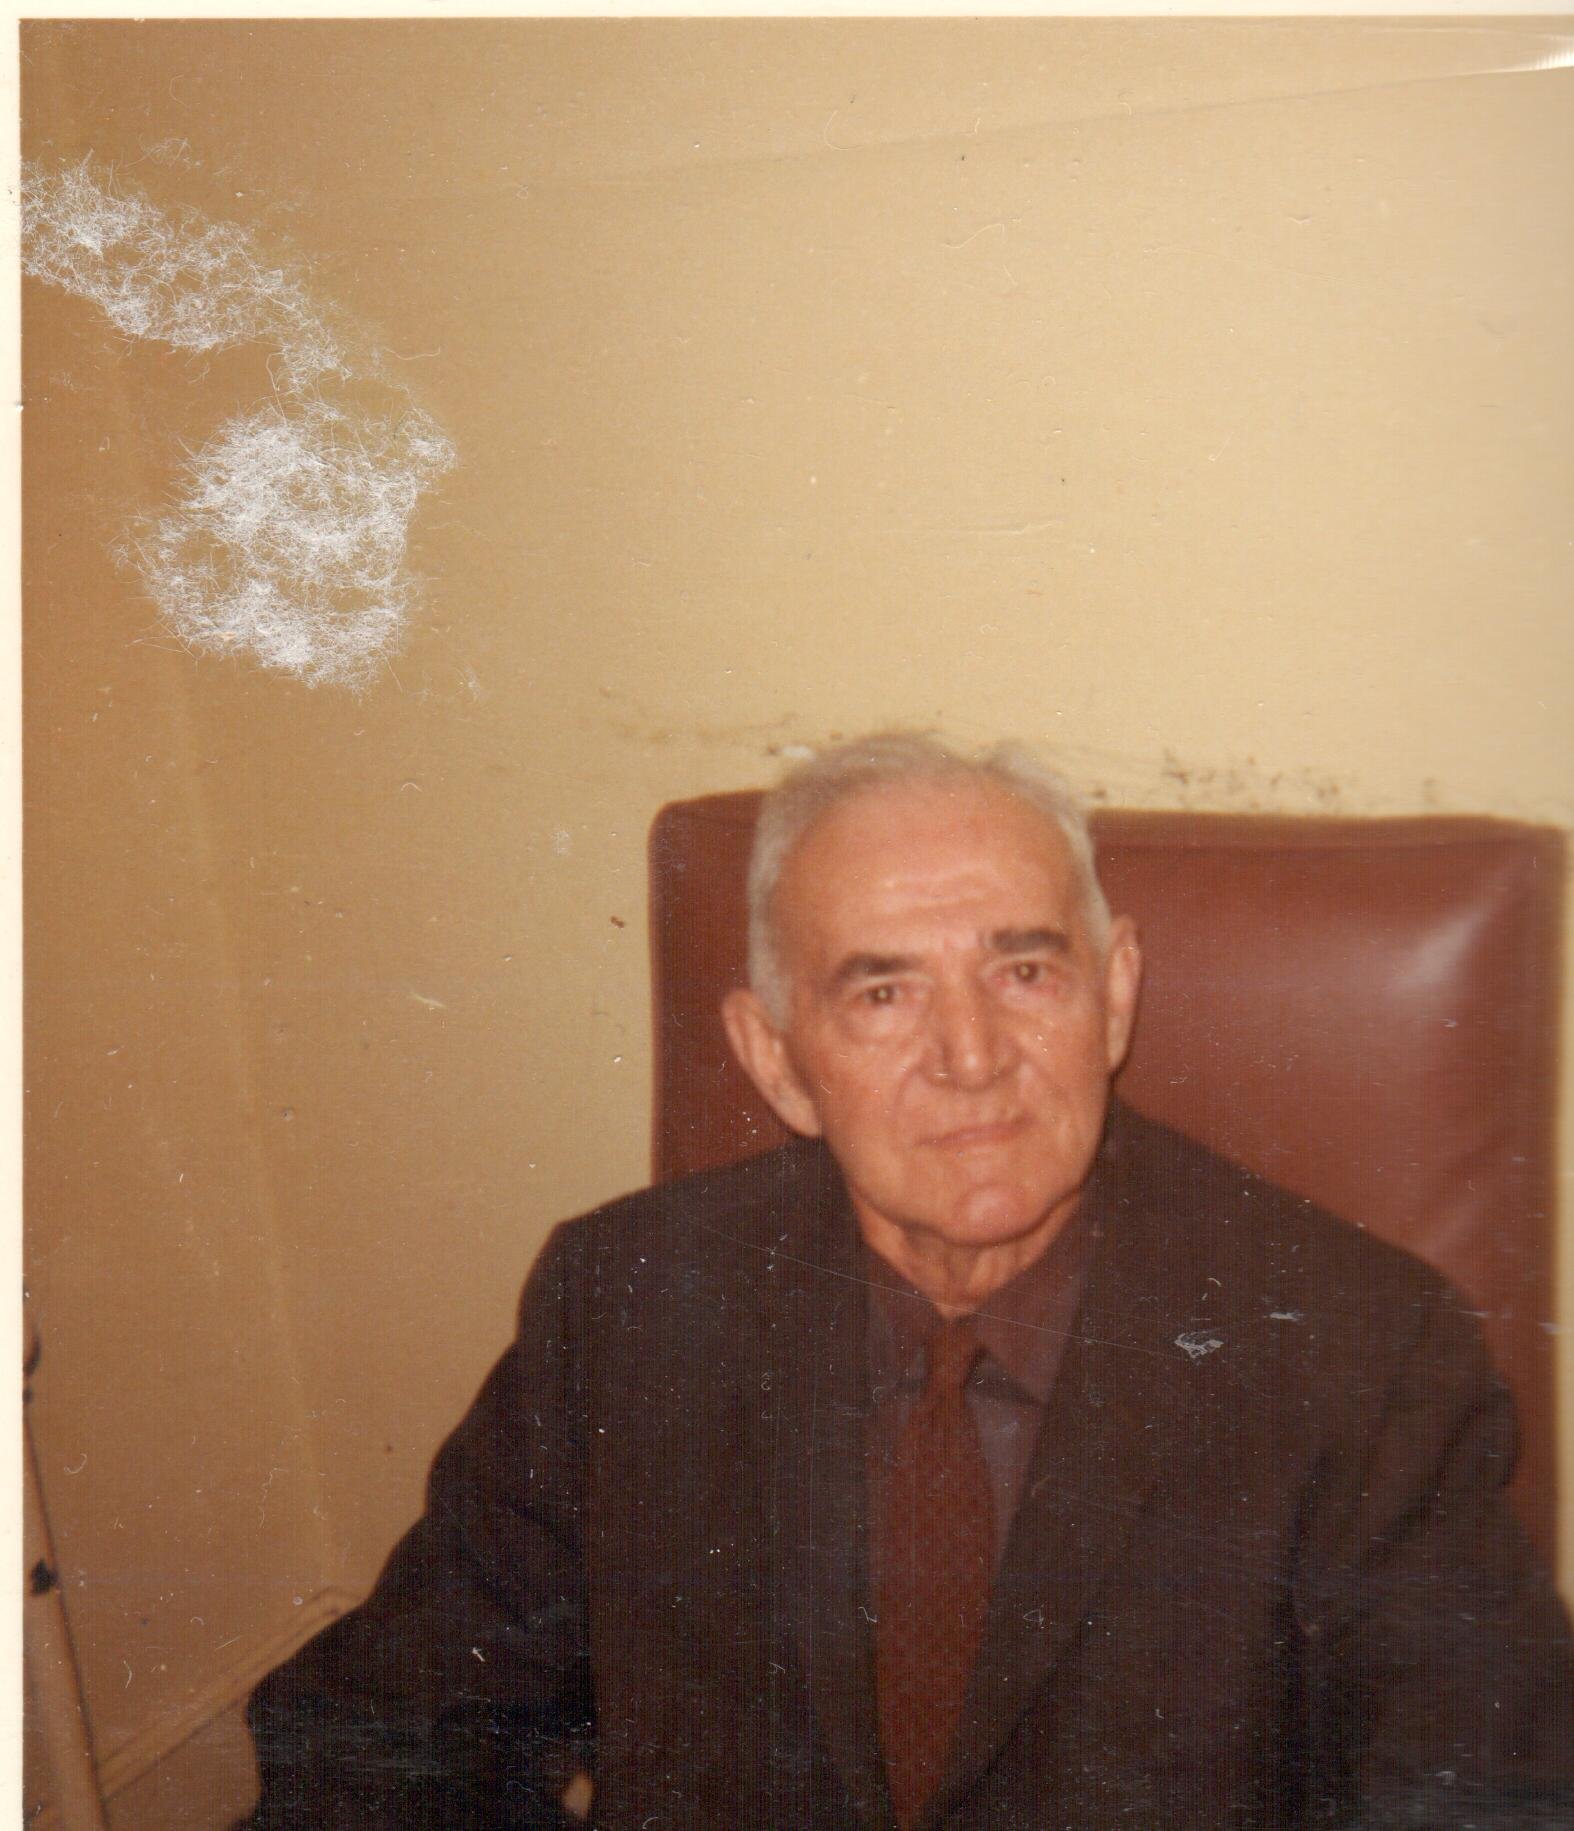 Robert May ca 1970